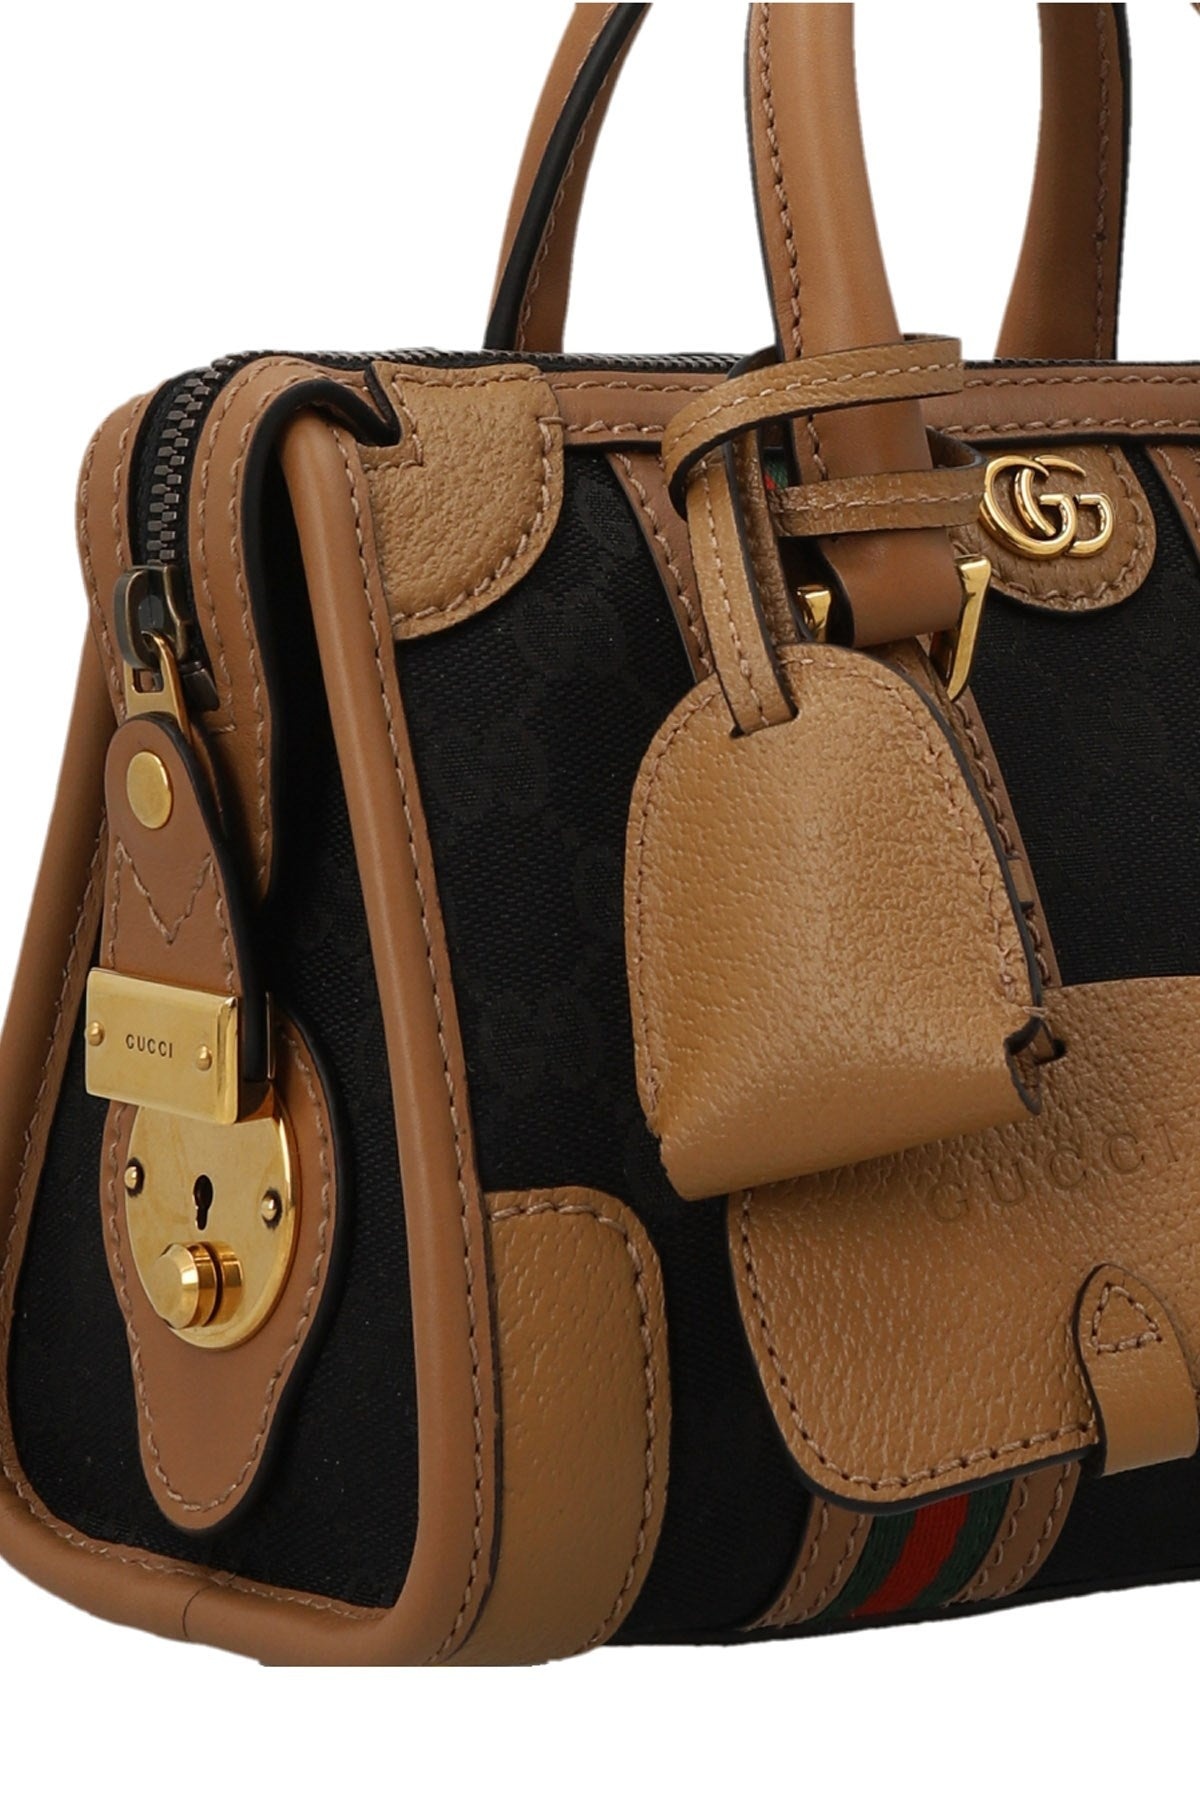 Gucci Women 'Original Gg' Mini Handbag - 3